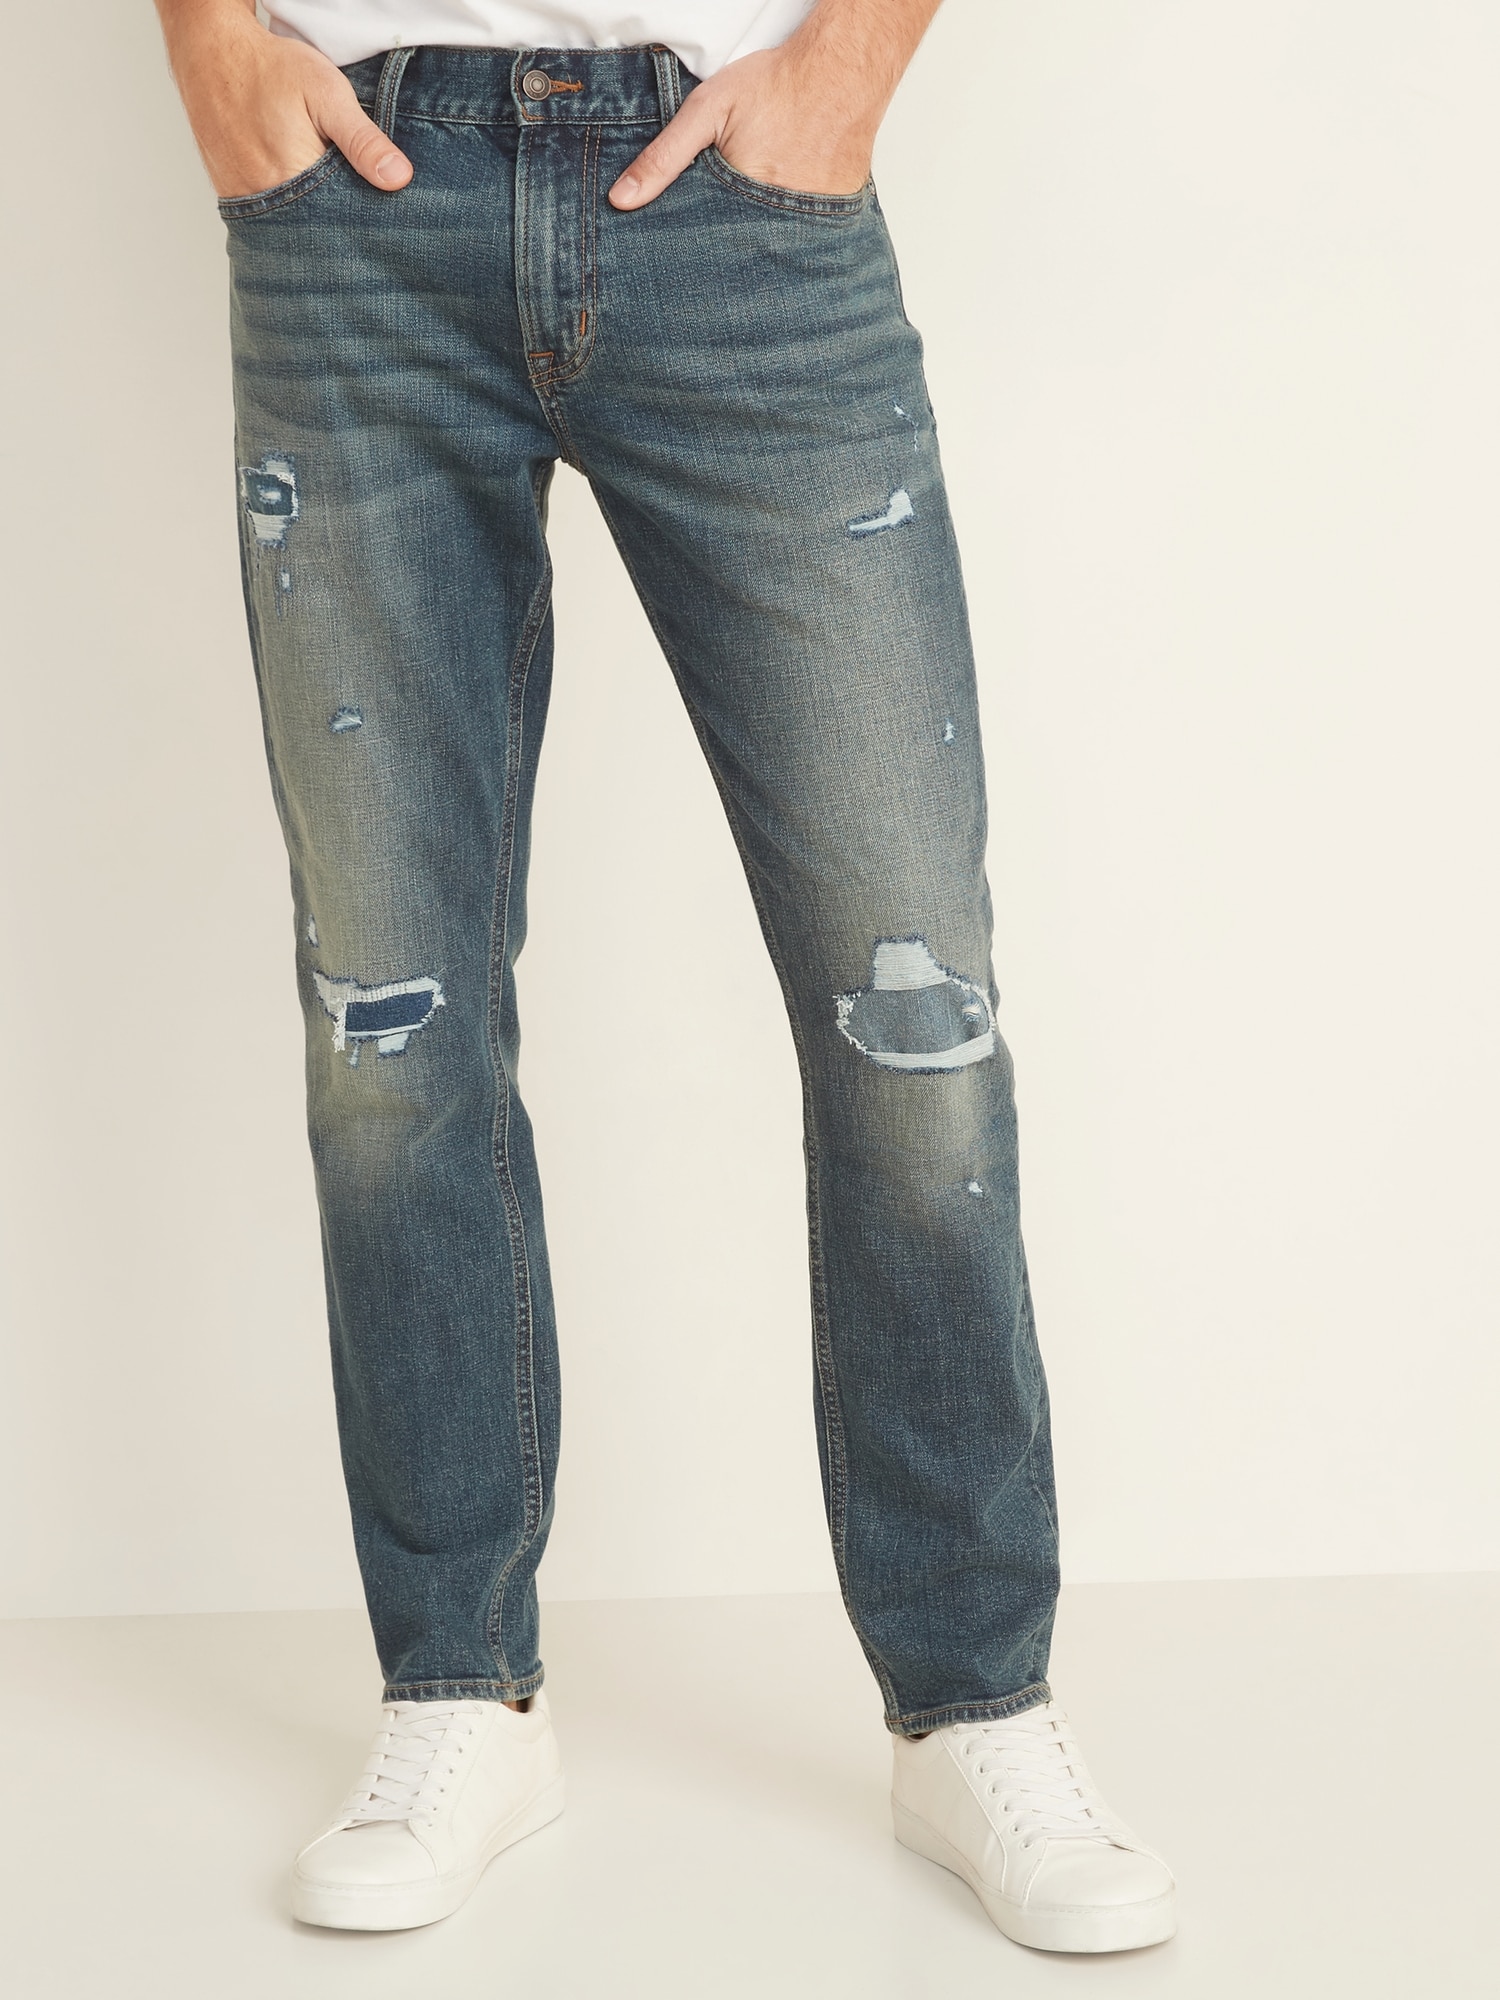 old navy flex jeans